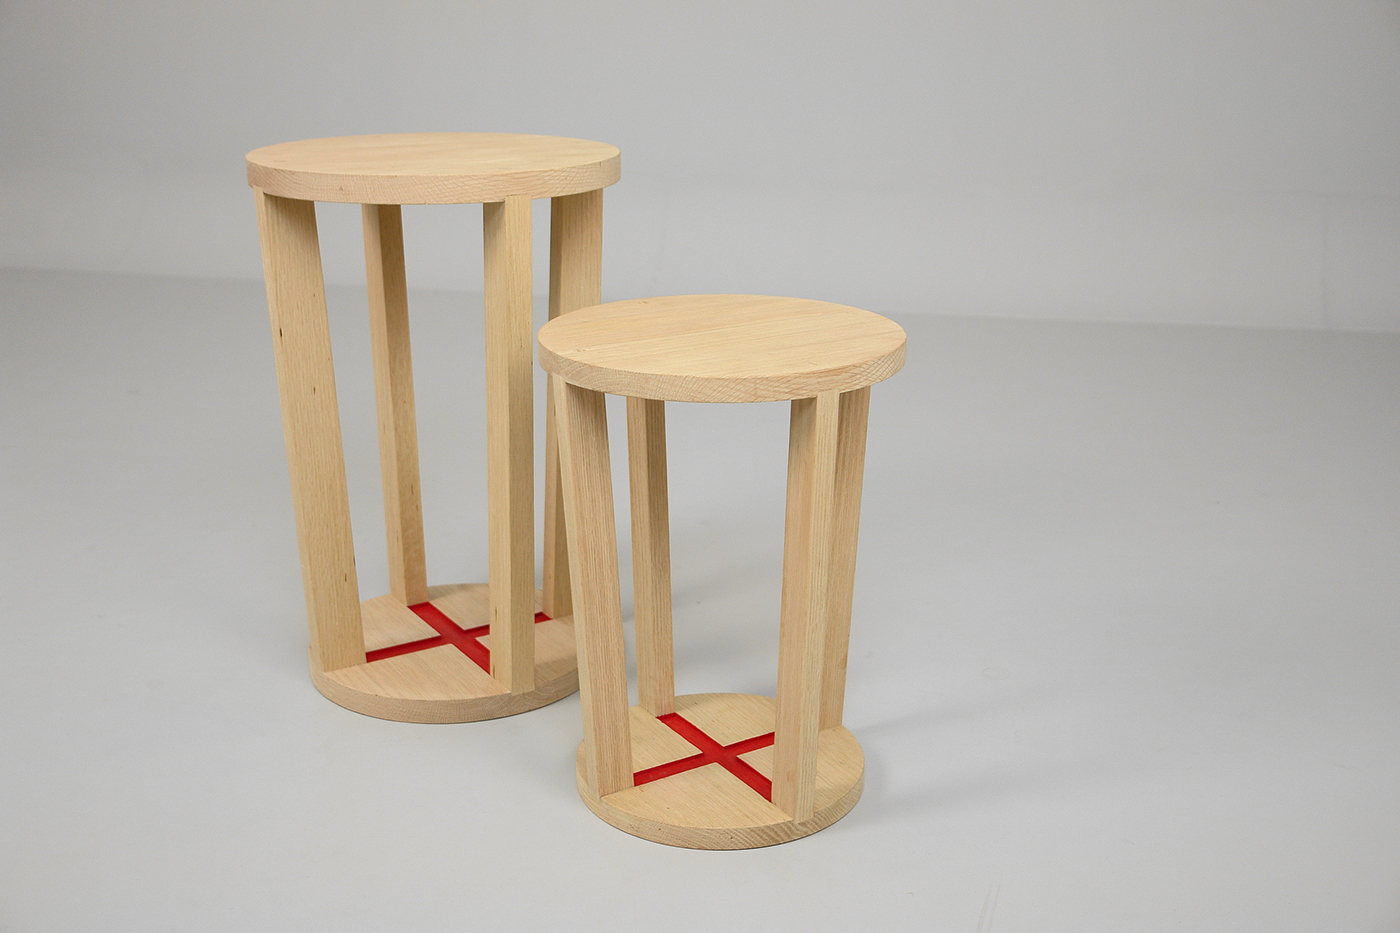 CRUZ design dpigs stool banco product furniture